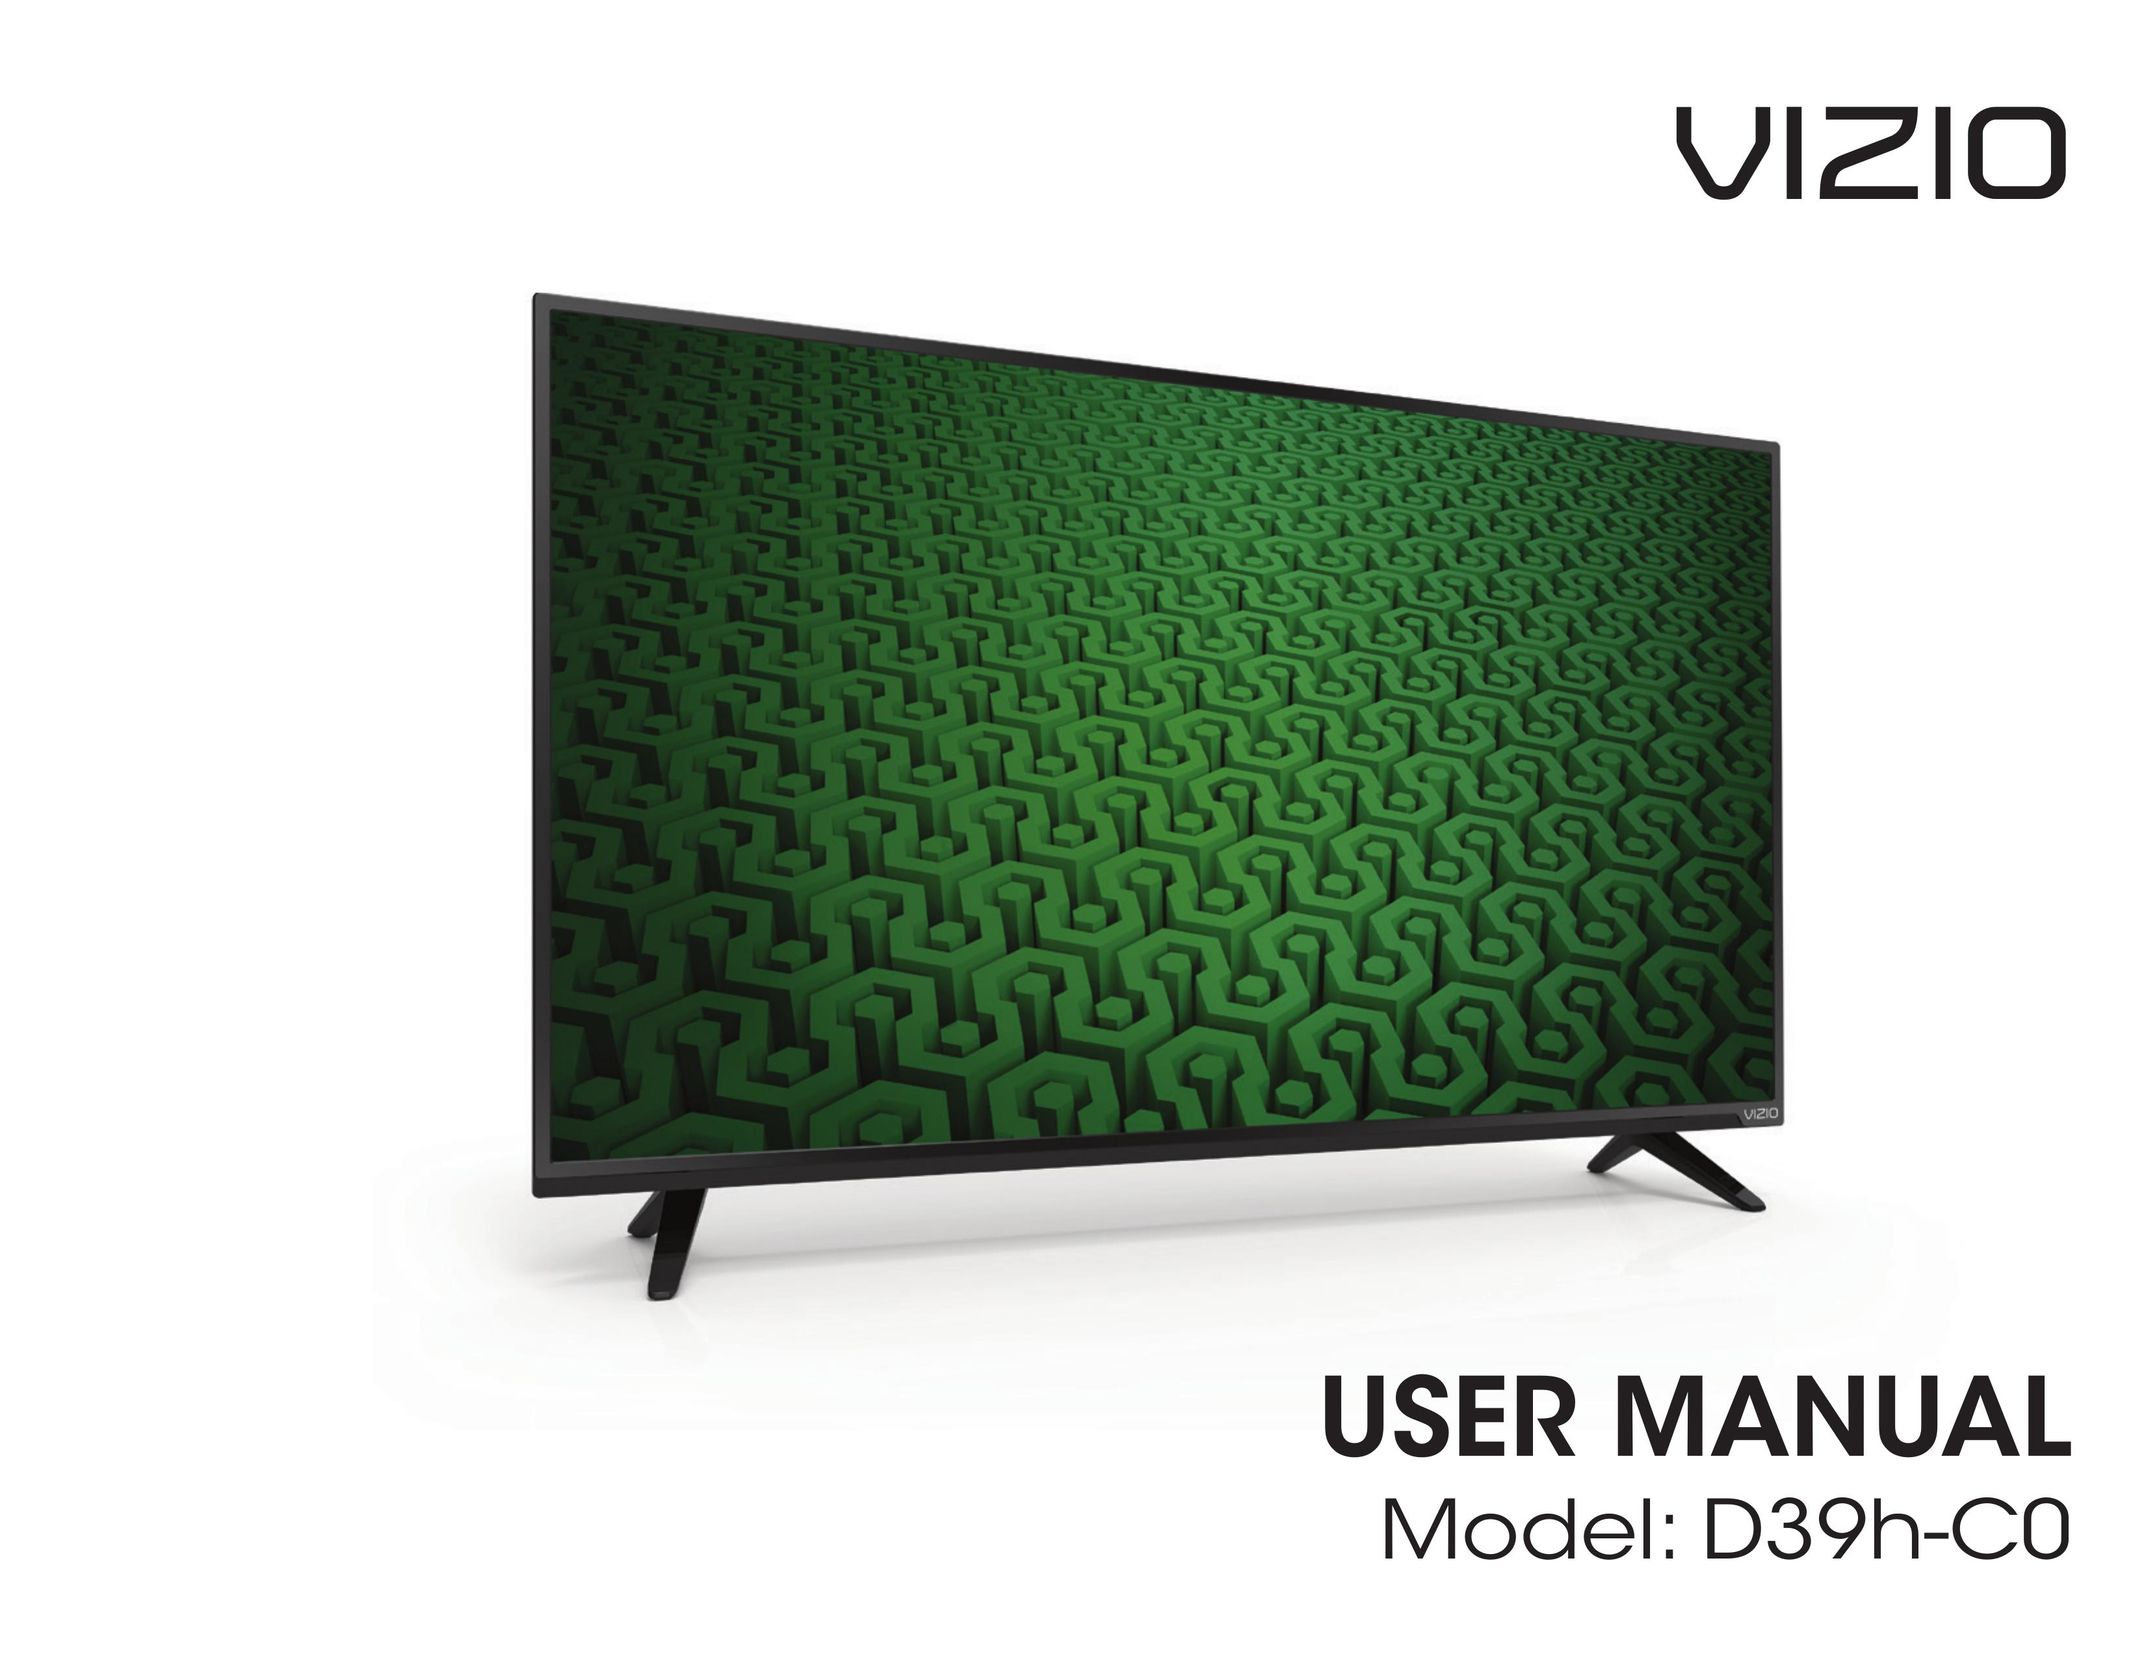 Vizio D39h-C0 Flat Panel Television User Manual